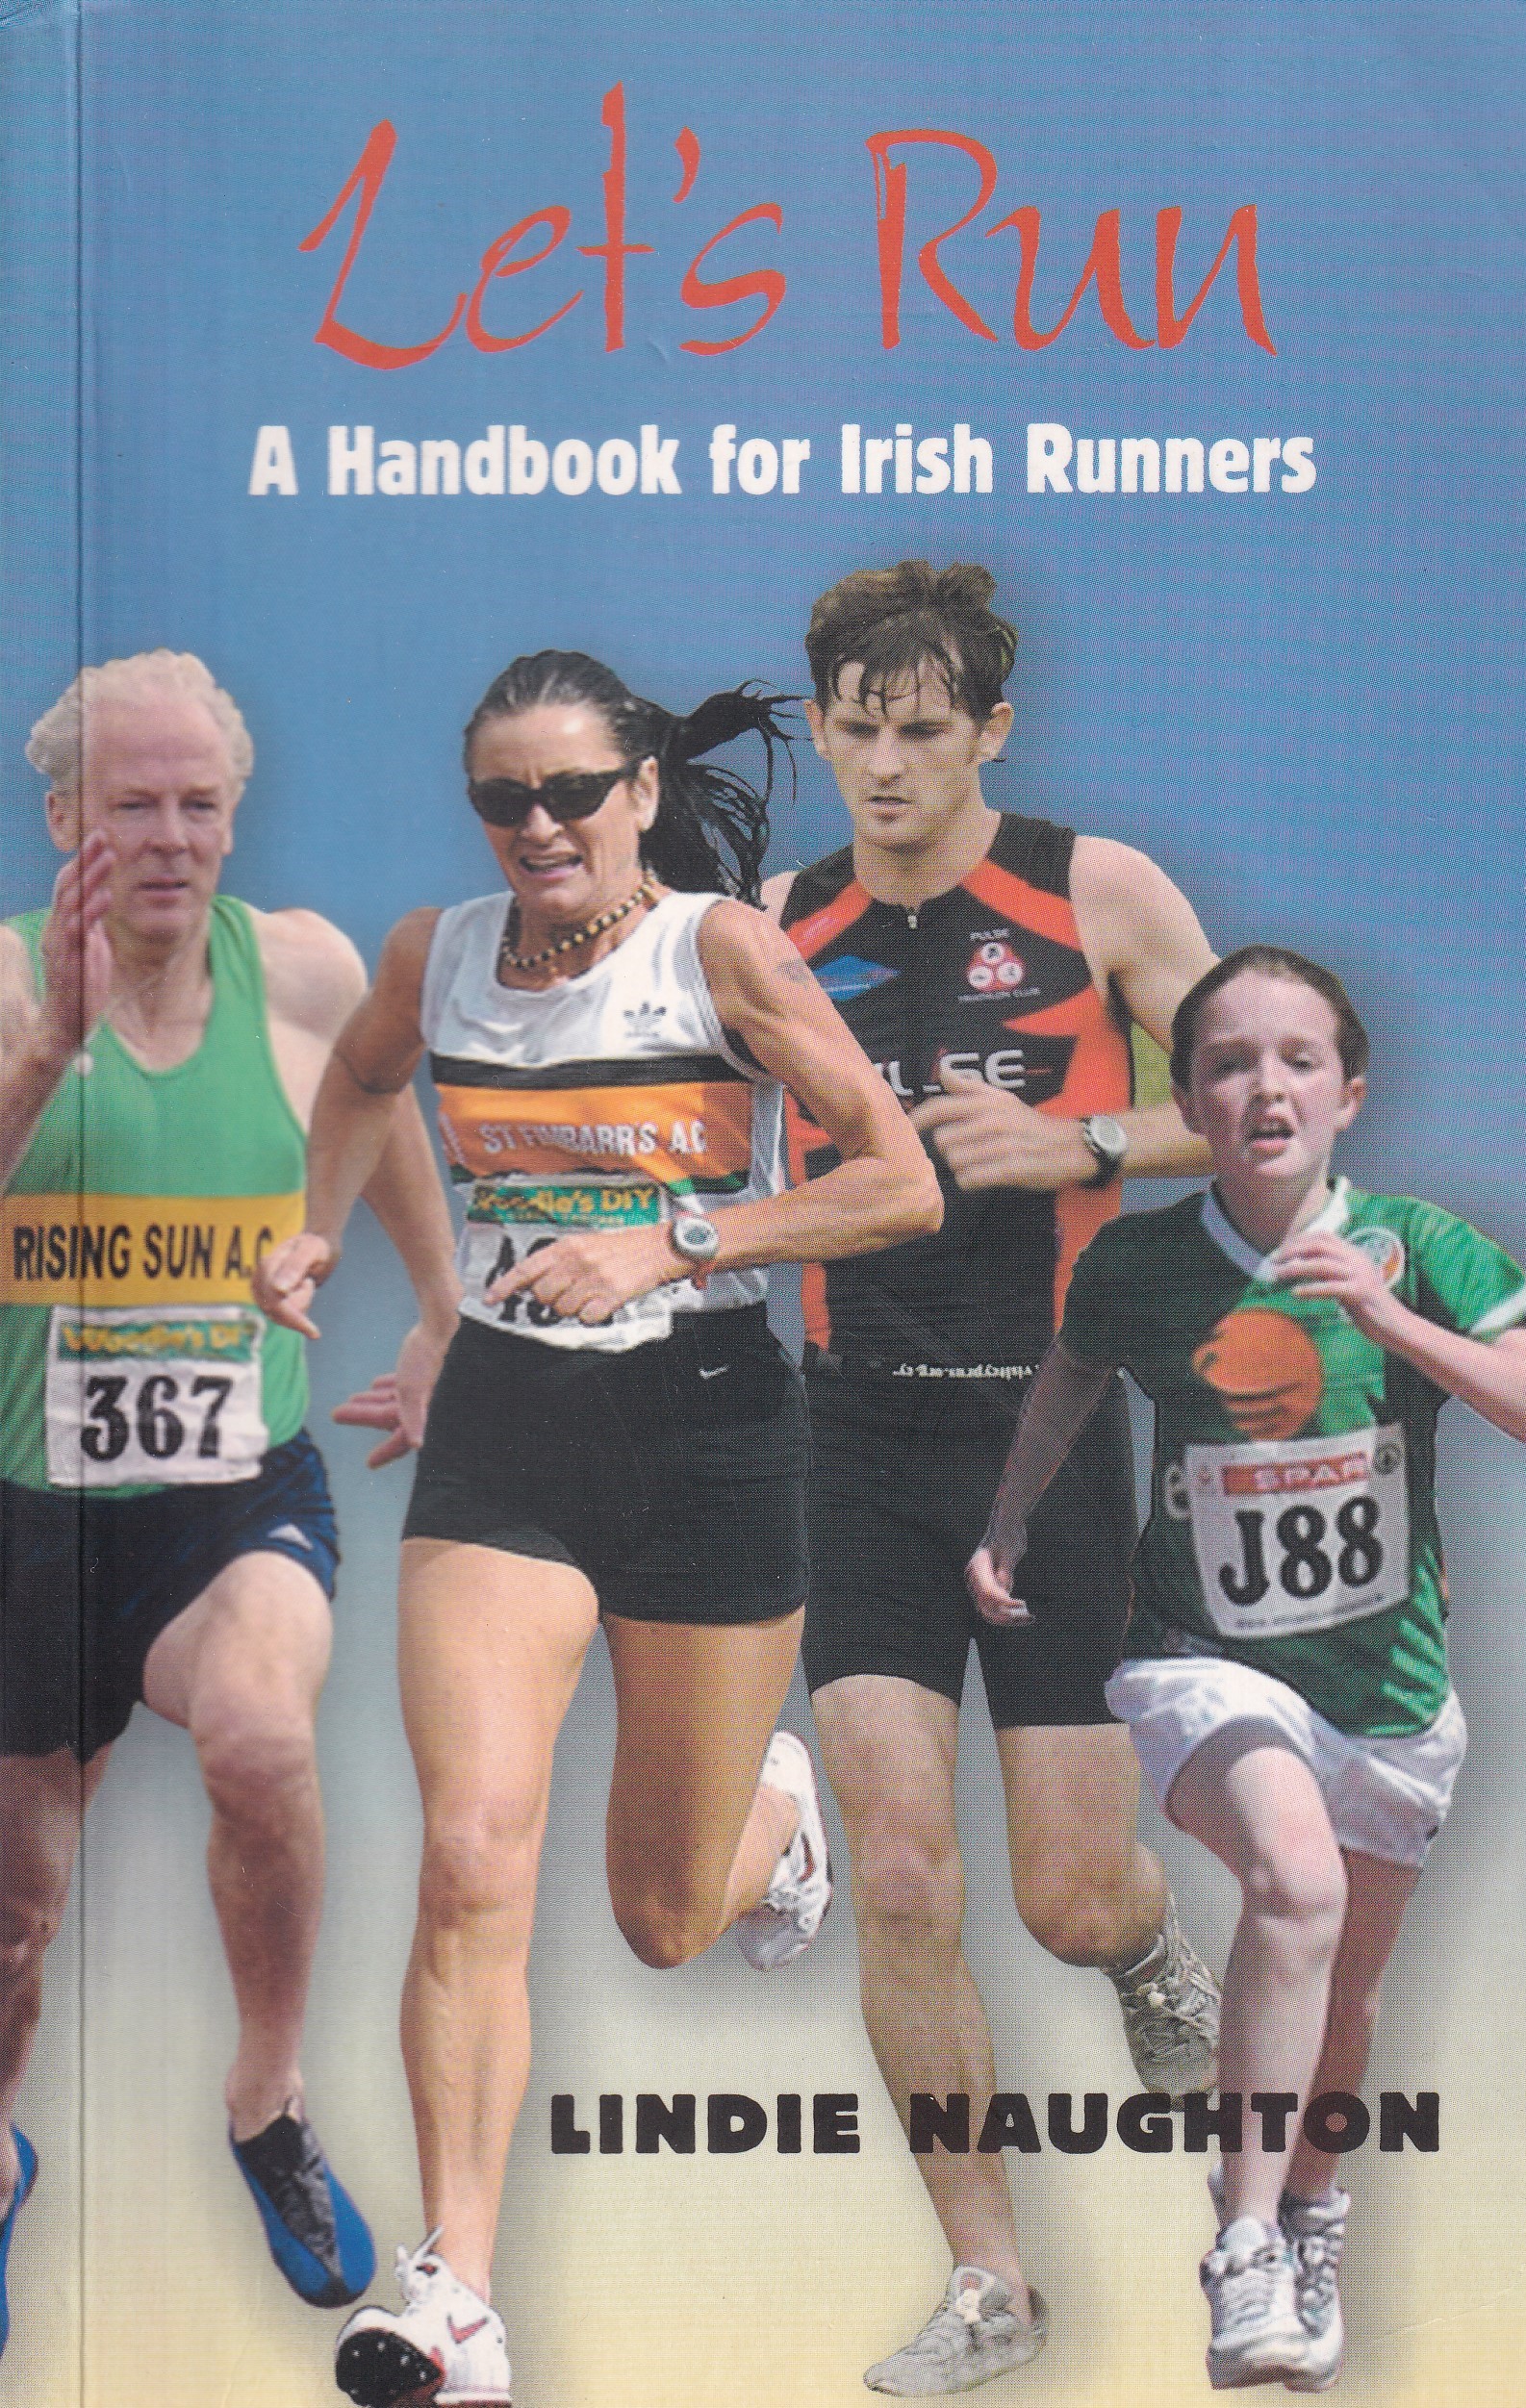 Let’s Run: A Handbook for Irish Runners | Lindie Naughton | Charlie Byrne's